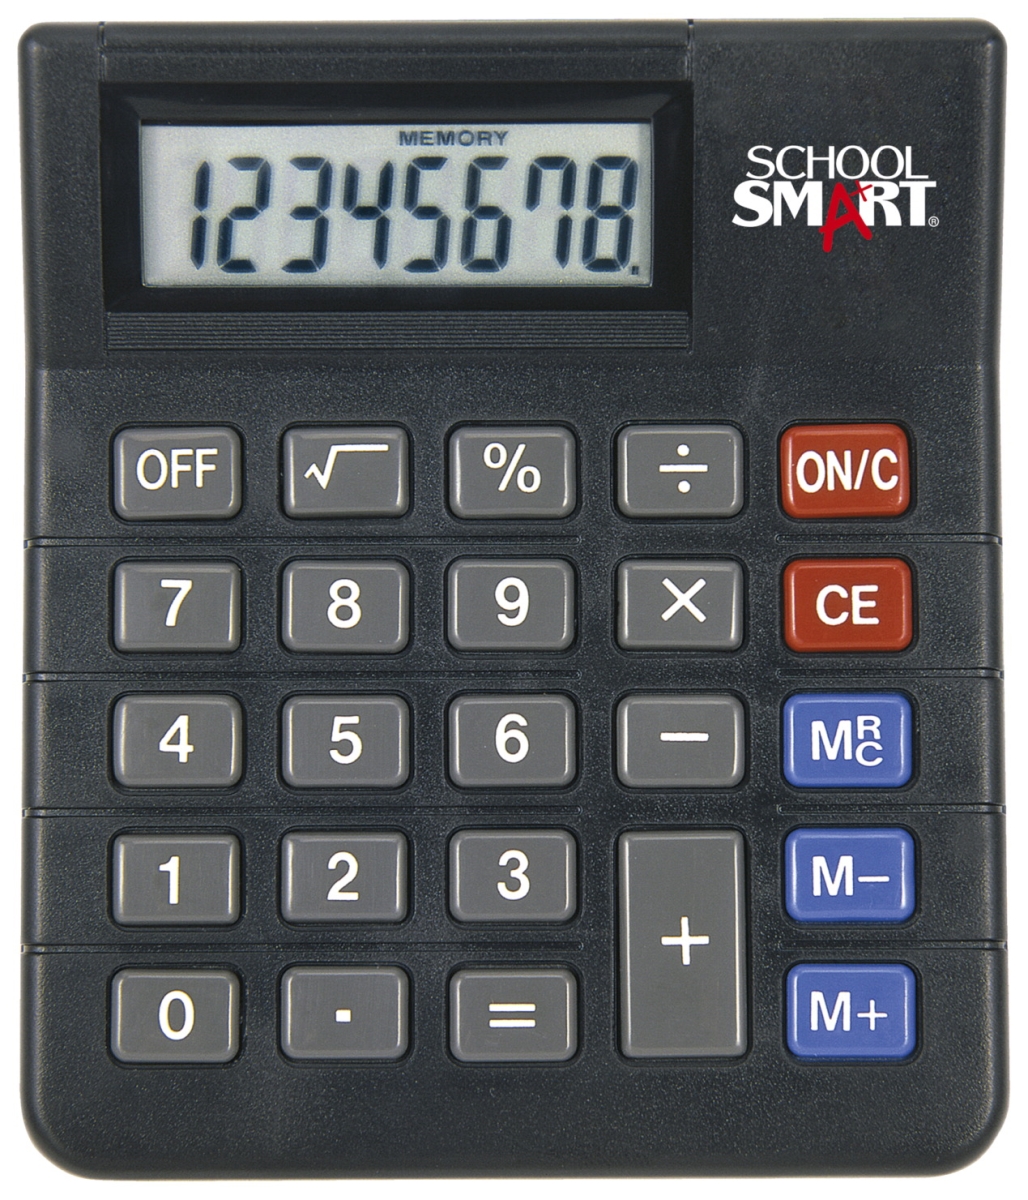 1596817 School Smart Large Display 8 Digit Calculator, Black